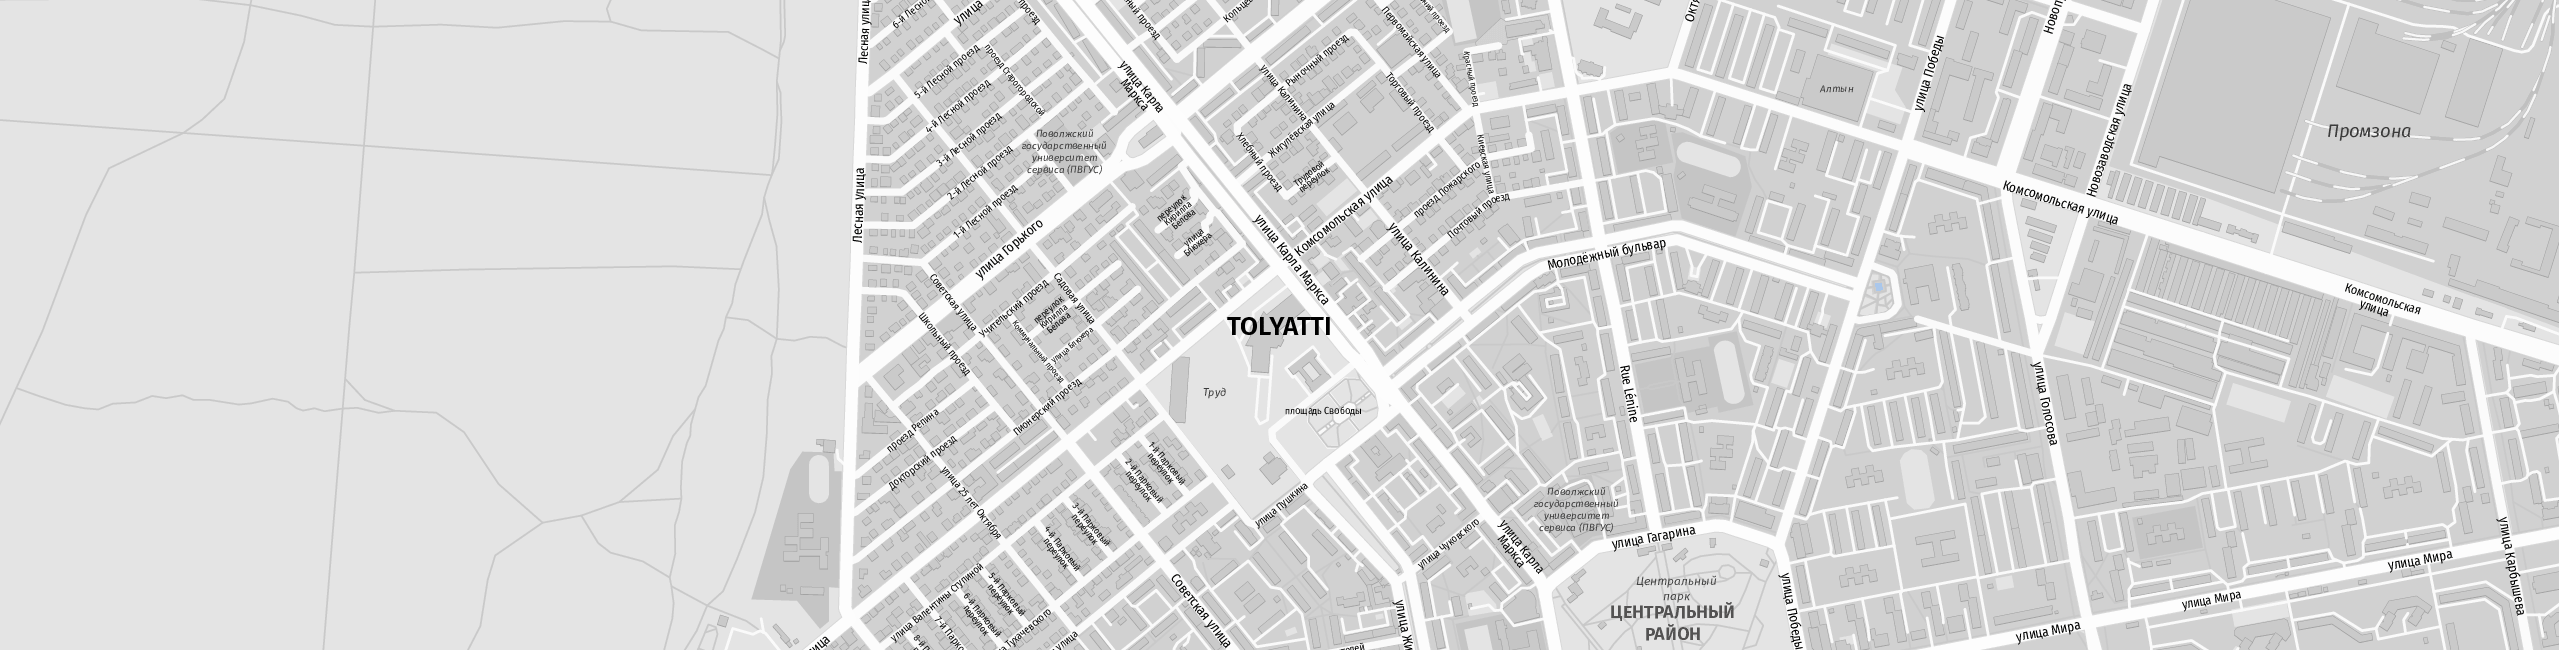 Stadtplan Toljatti zum Downloaden.